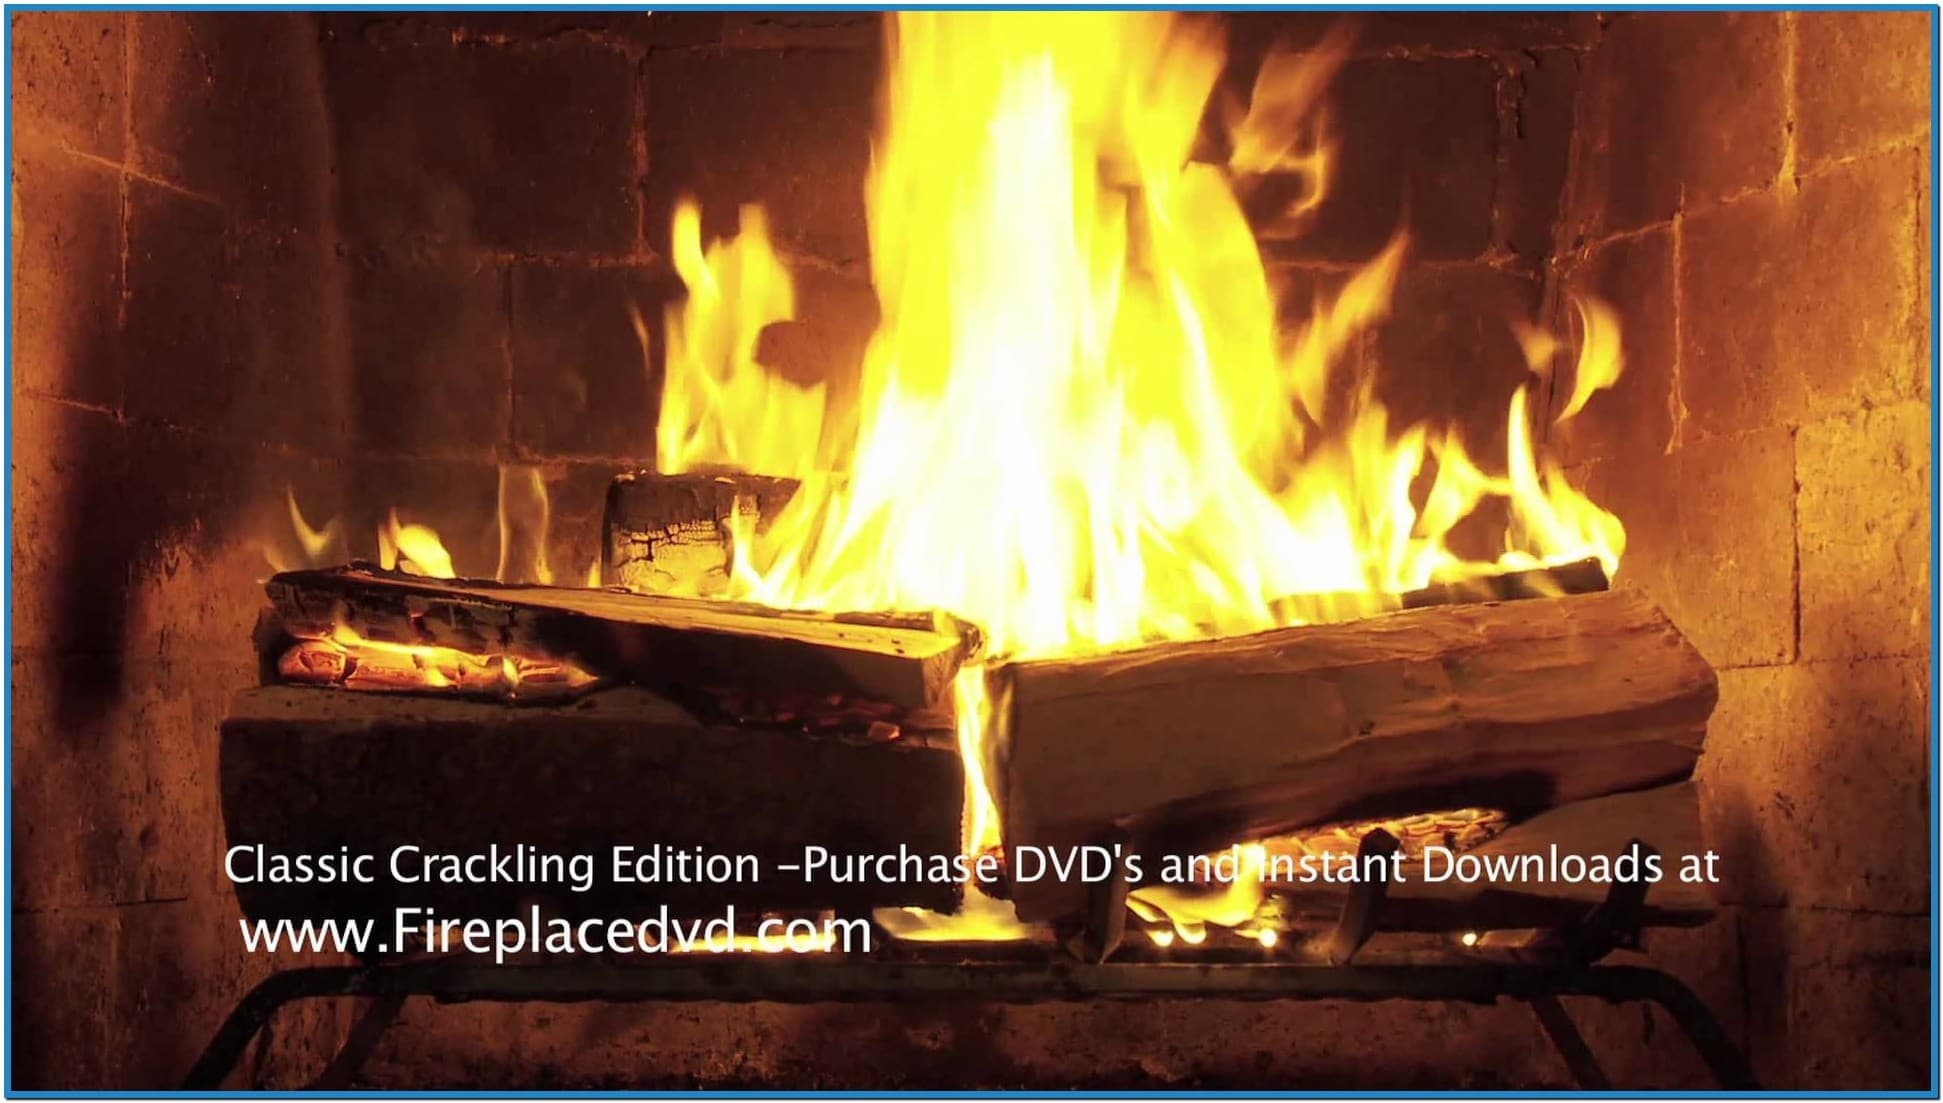 Firetask for mac download free